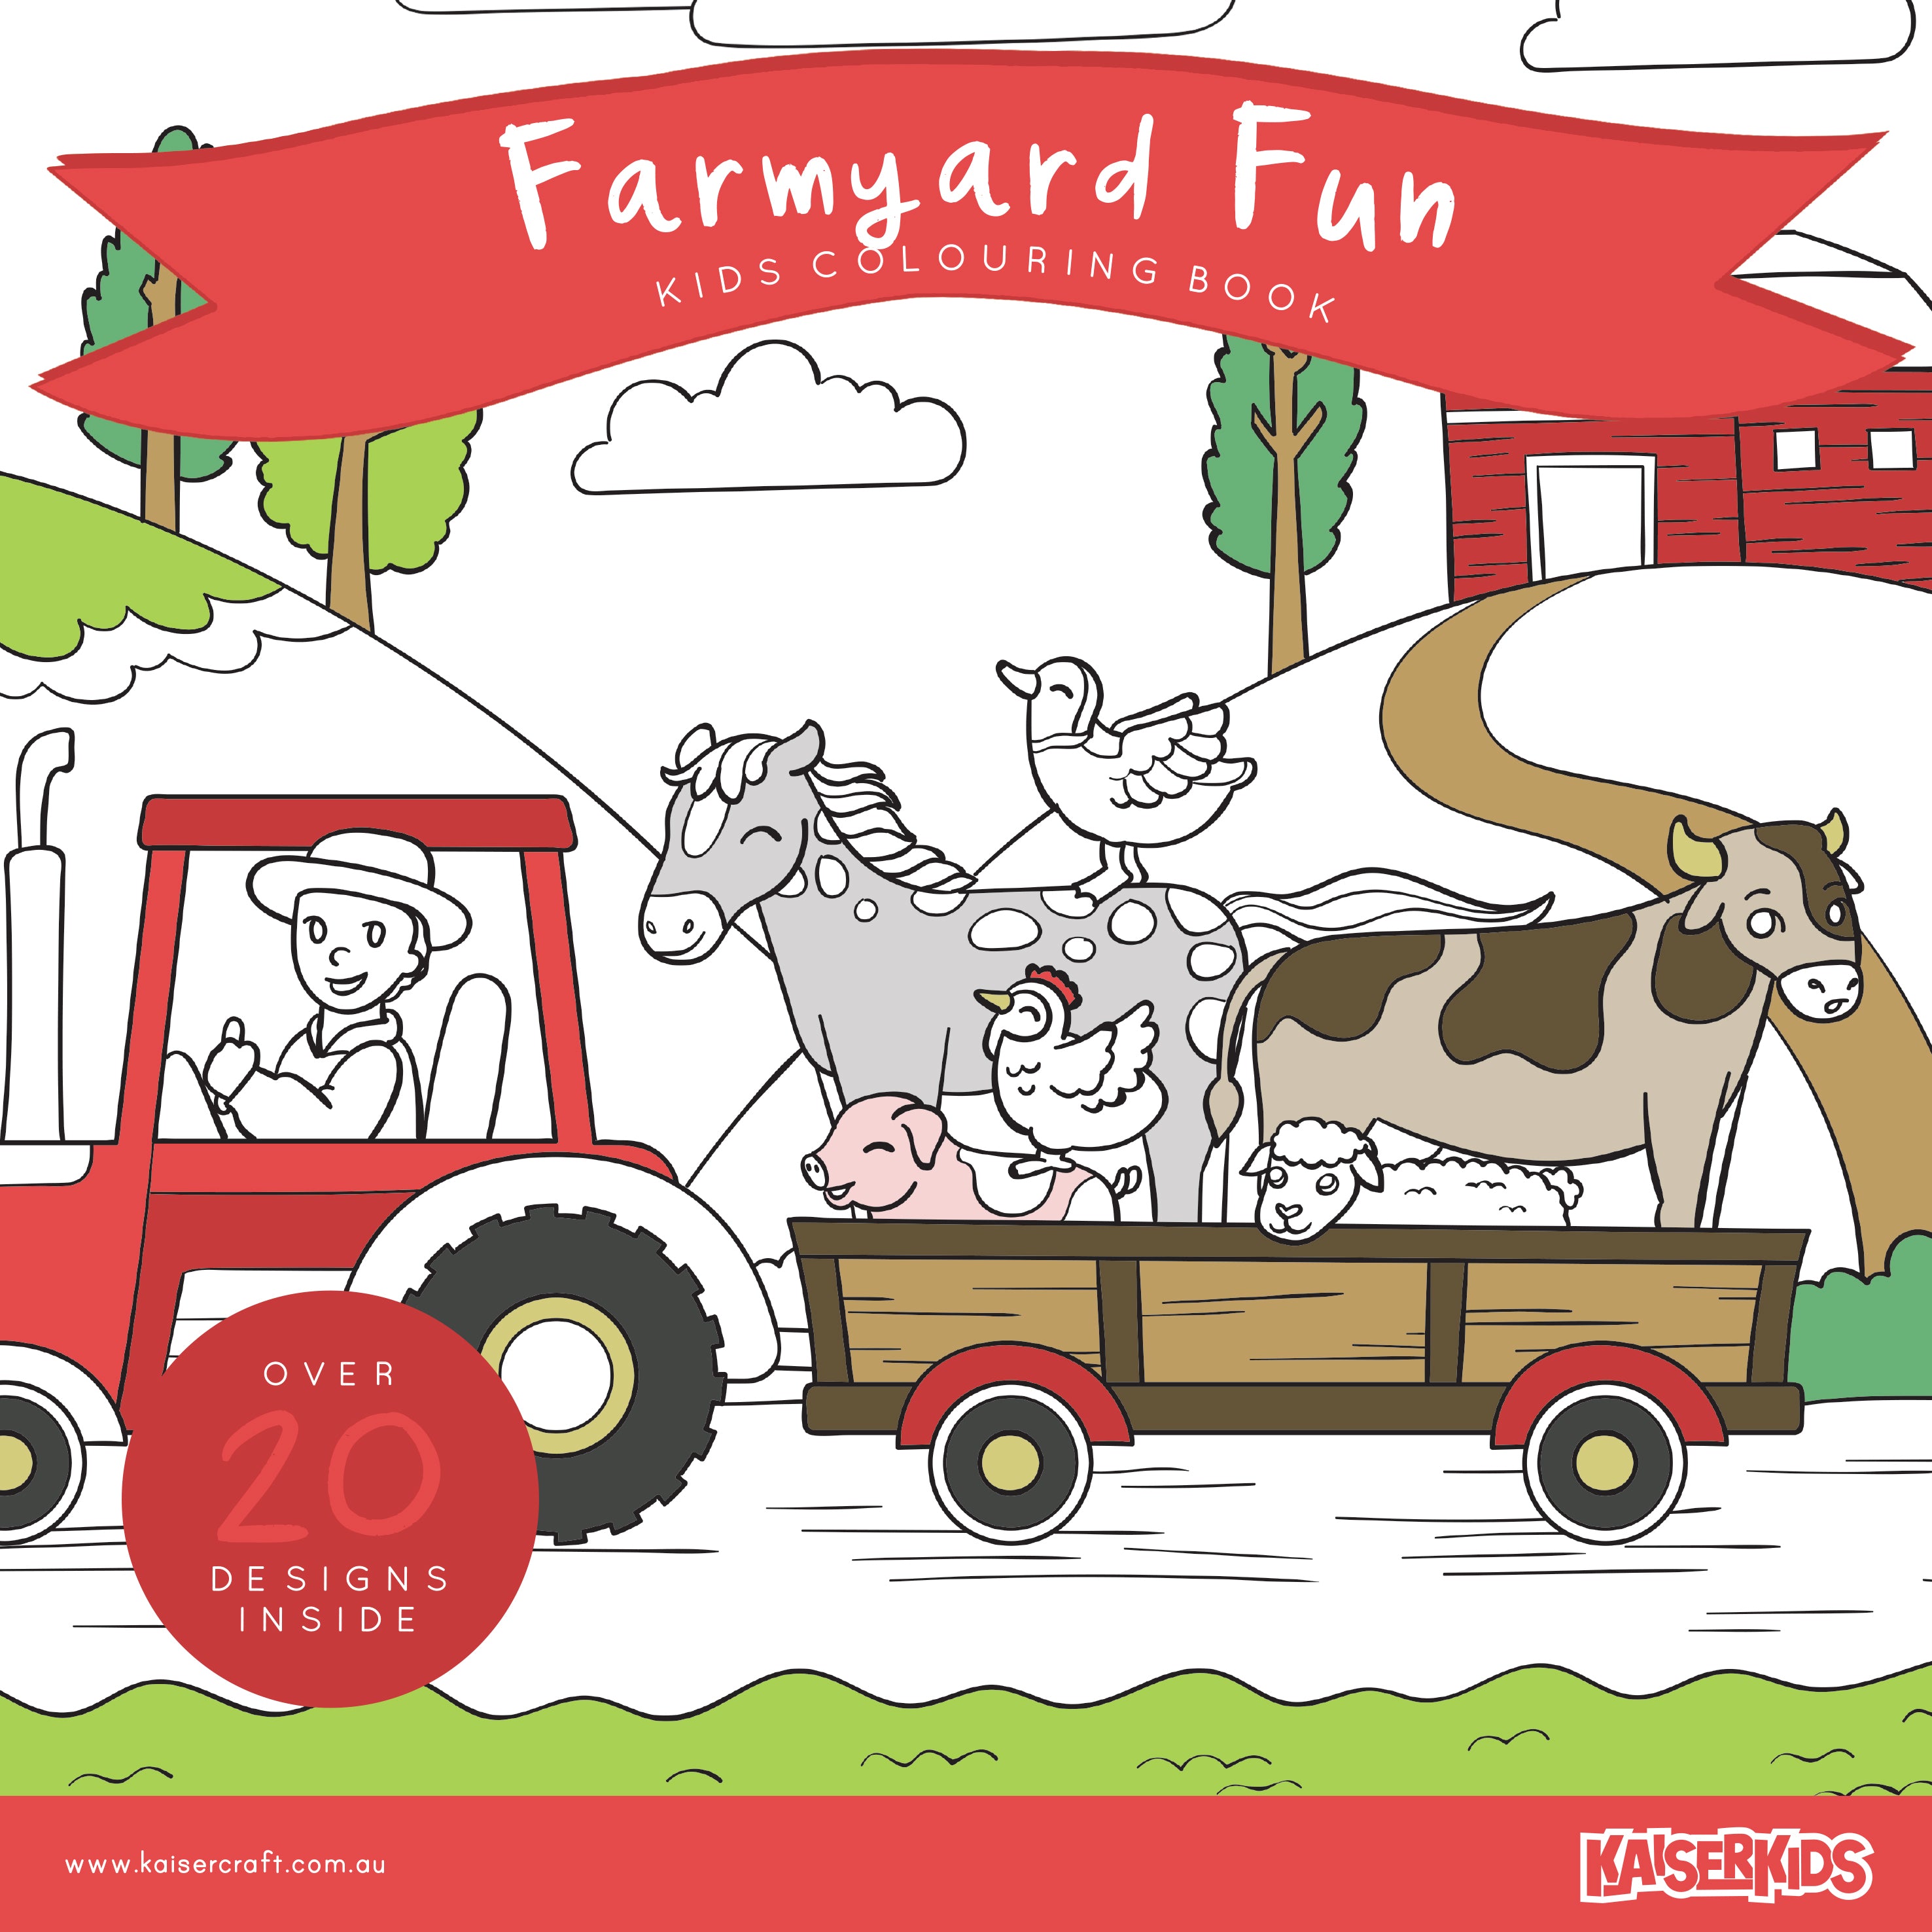 Kids Colouring Book - Farmyard Fun